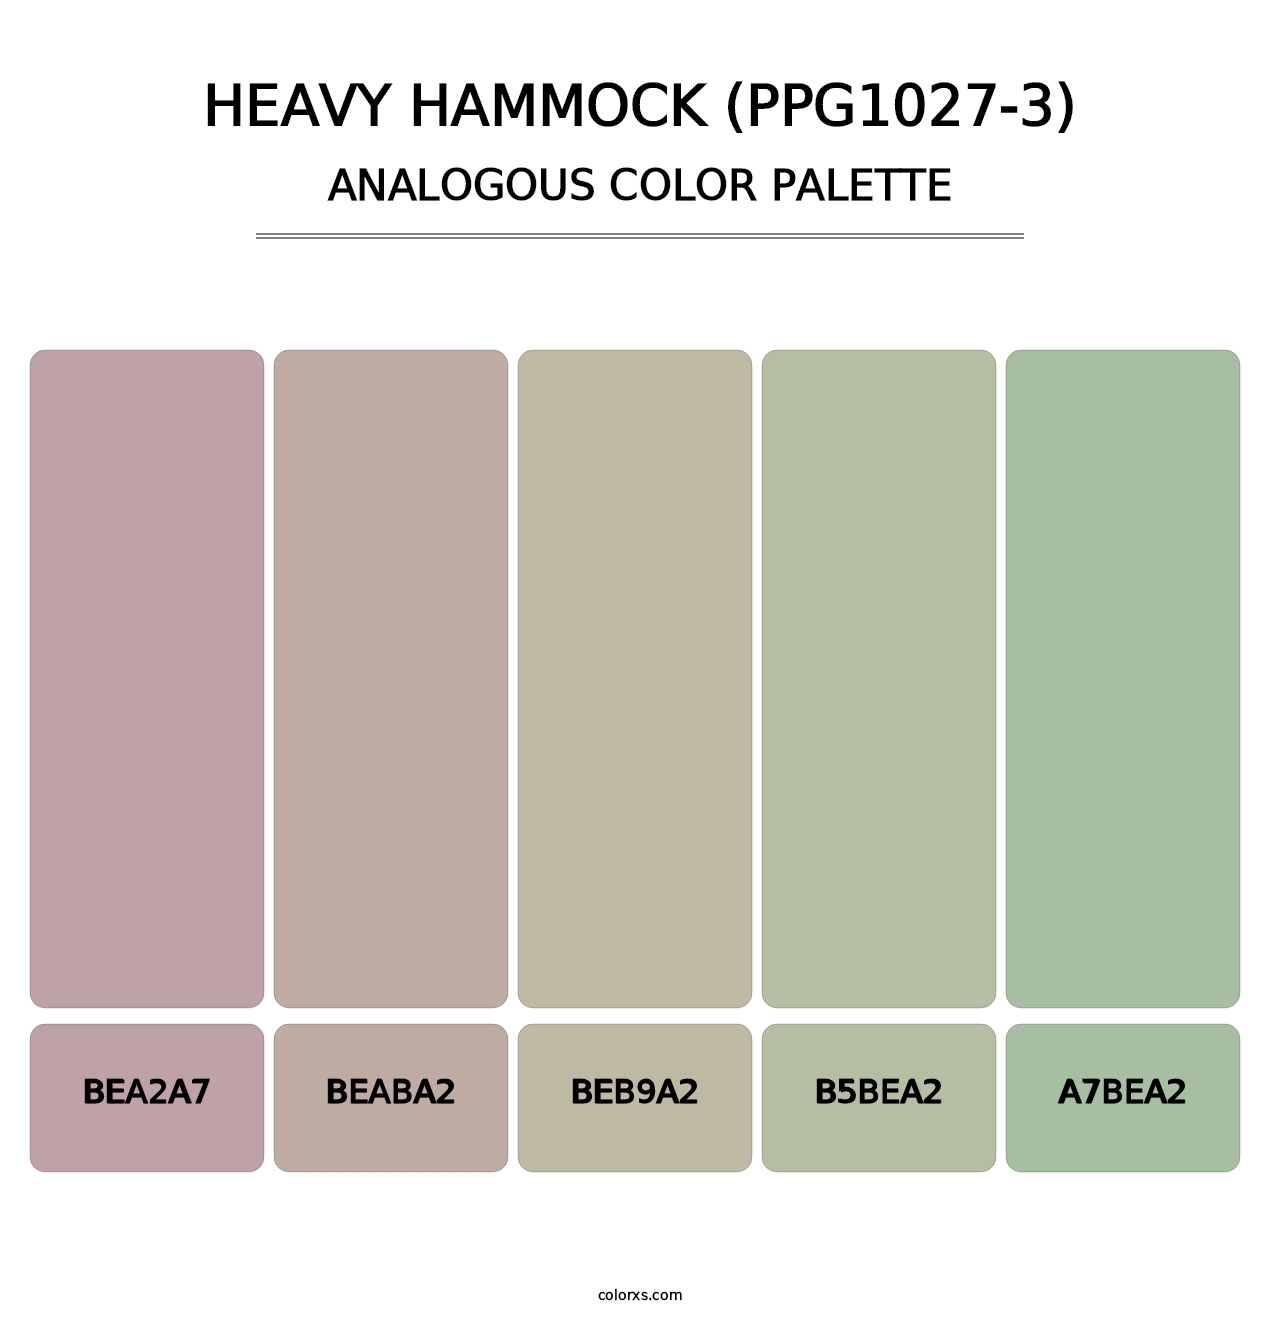 Heavy Hammock (PPG1027-3) - Analogous Color Palette